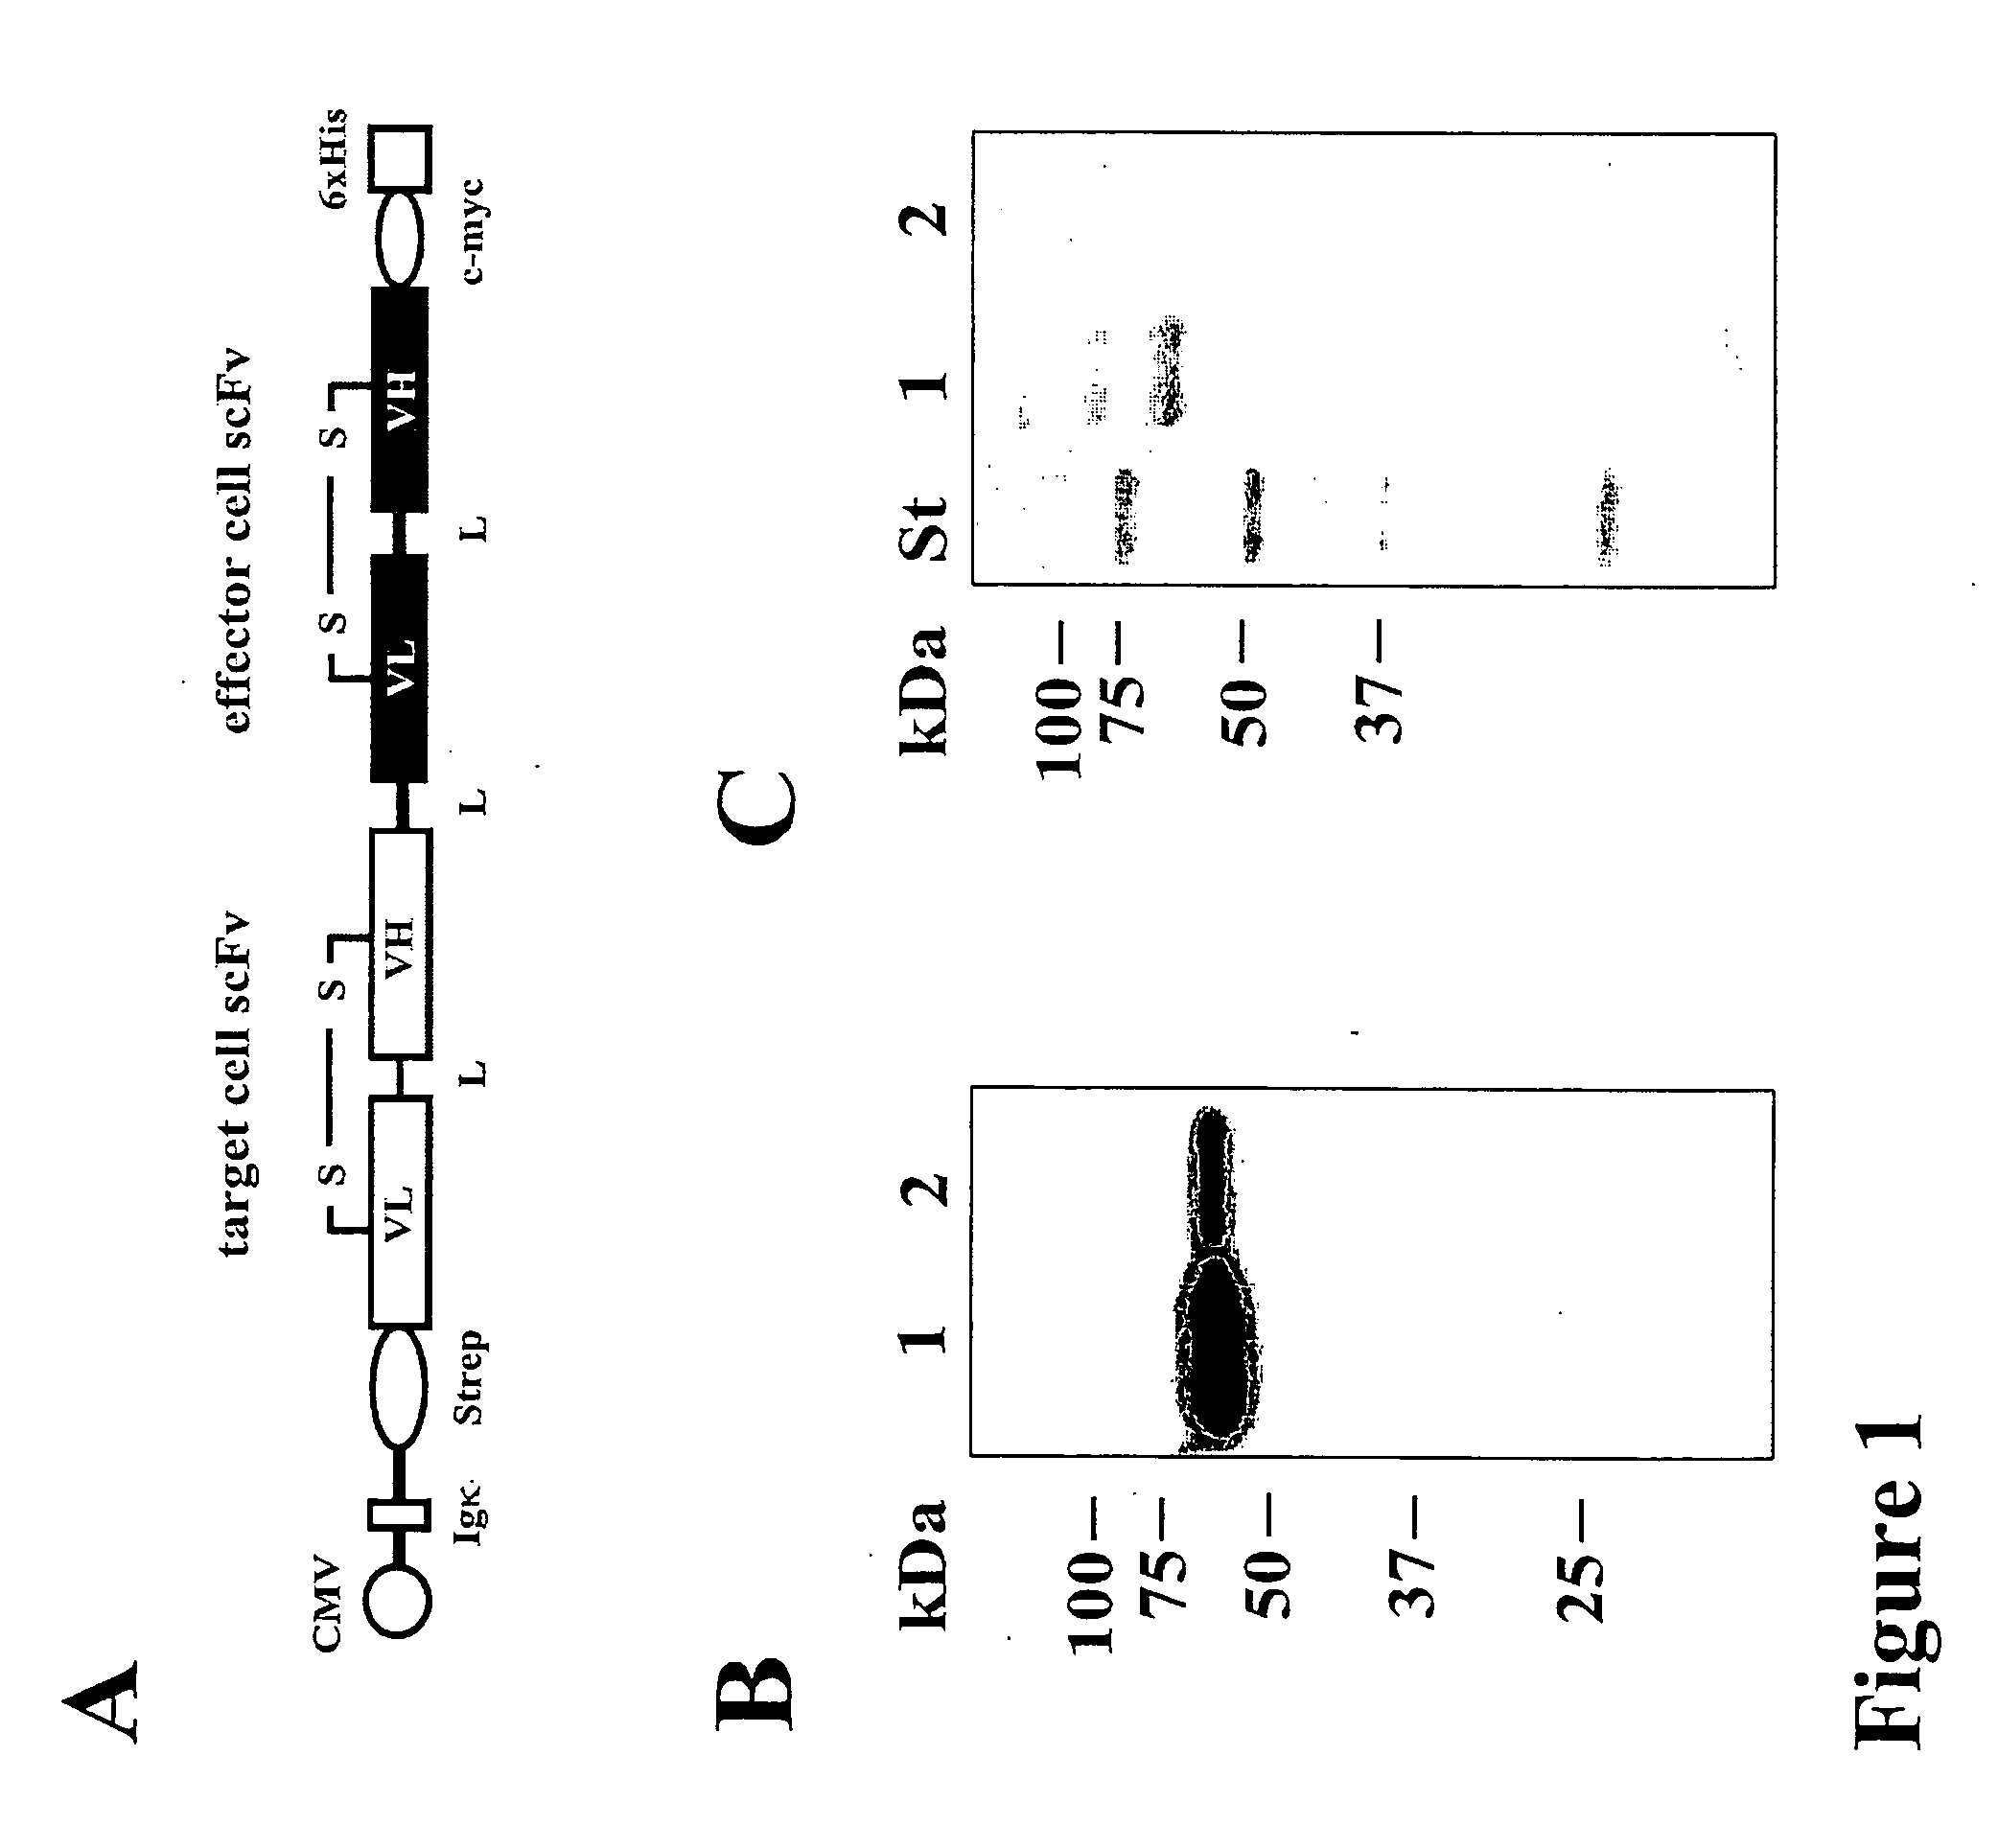 Bispecific antibody devoid of Fc region and method of treatment using same